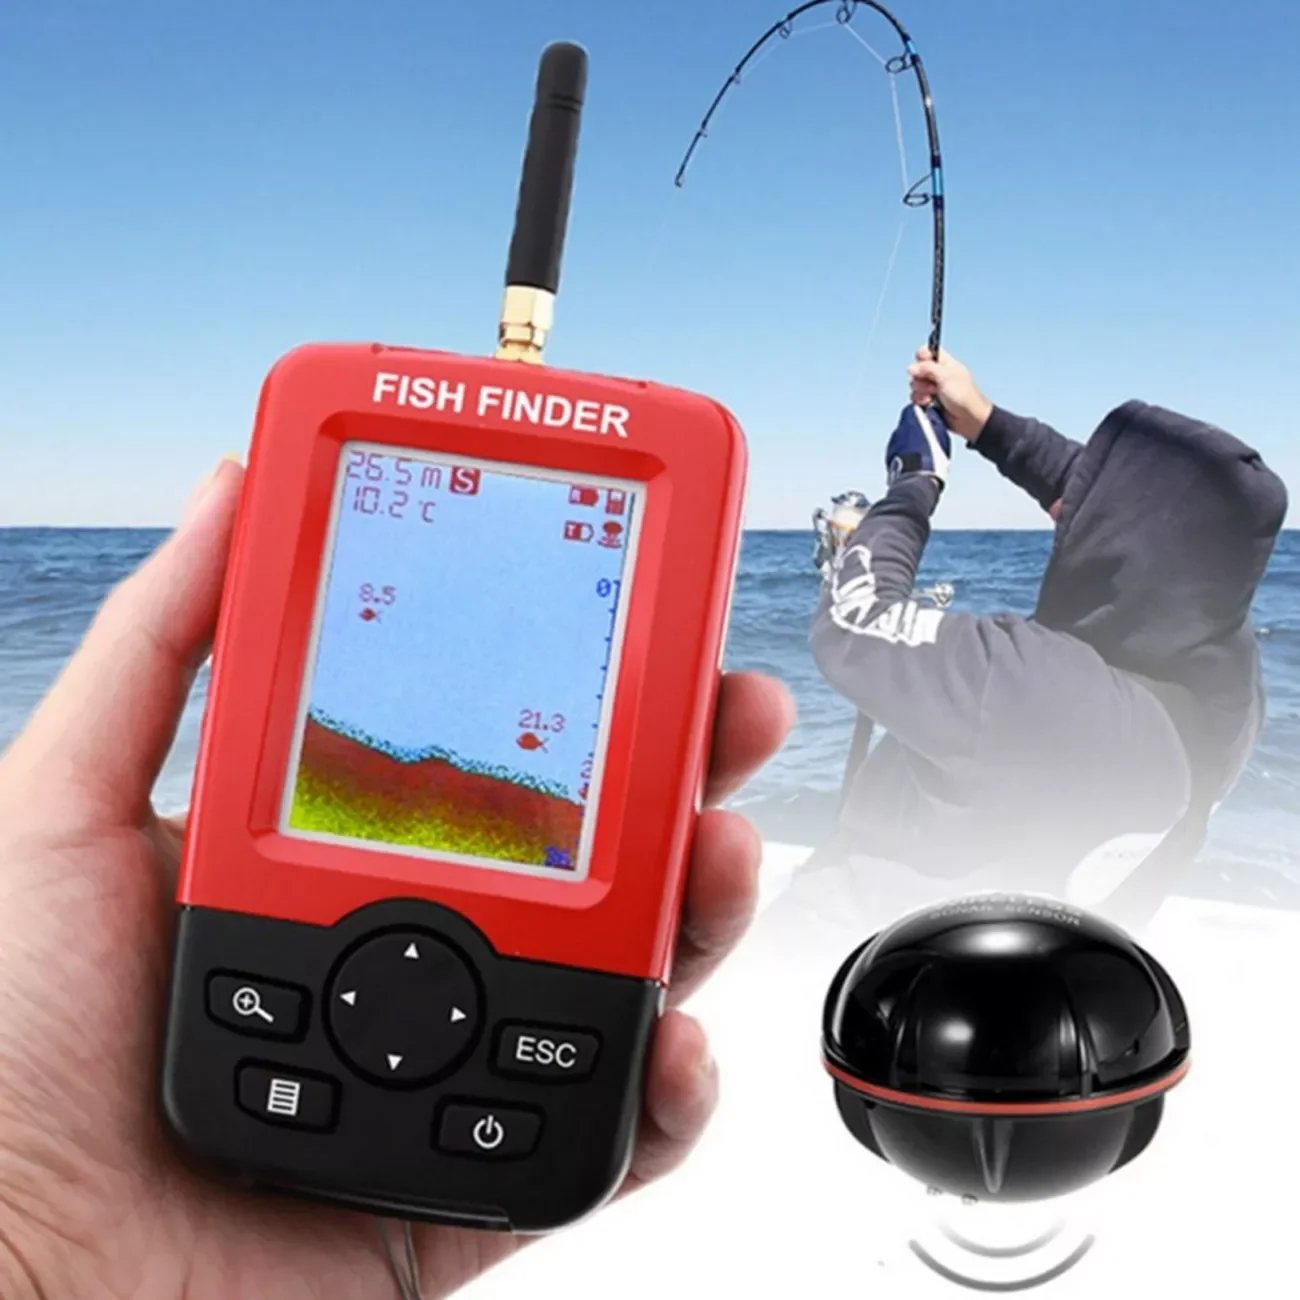 Enlarge Handheld Fish Finder Portable Wireless Sonar Sensor Fishfinder Depth Locator Fishing Gear LCD Display